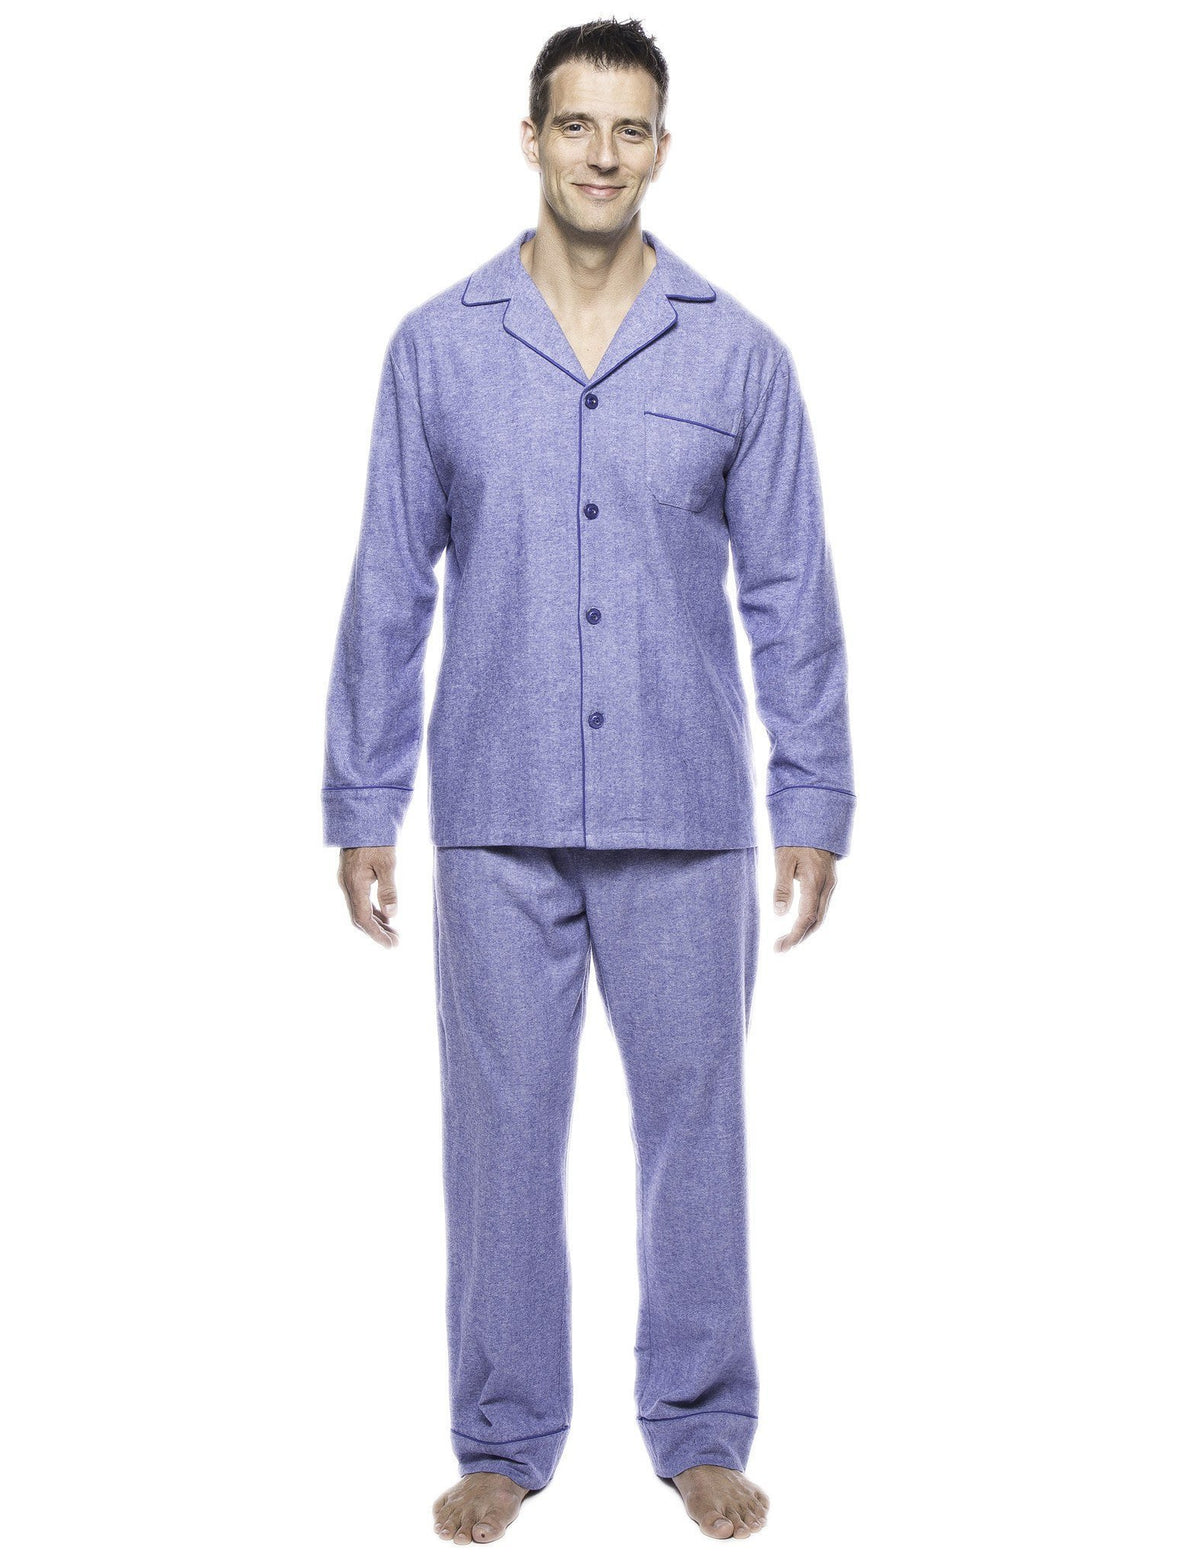 Box Packaged Men's Premium 100% Cotton Flannel Pajama Sleepwear Set - Herringbone Blue